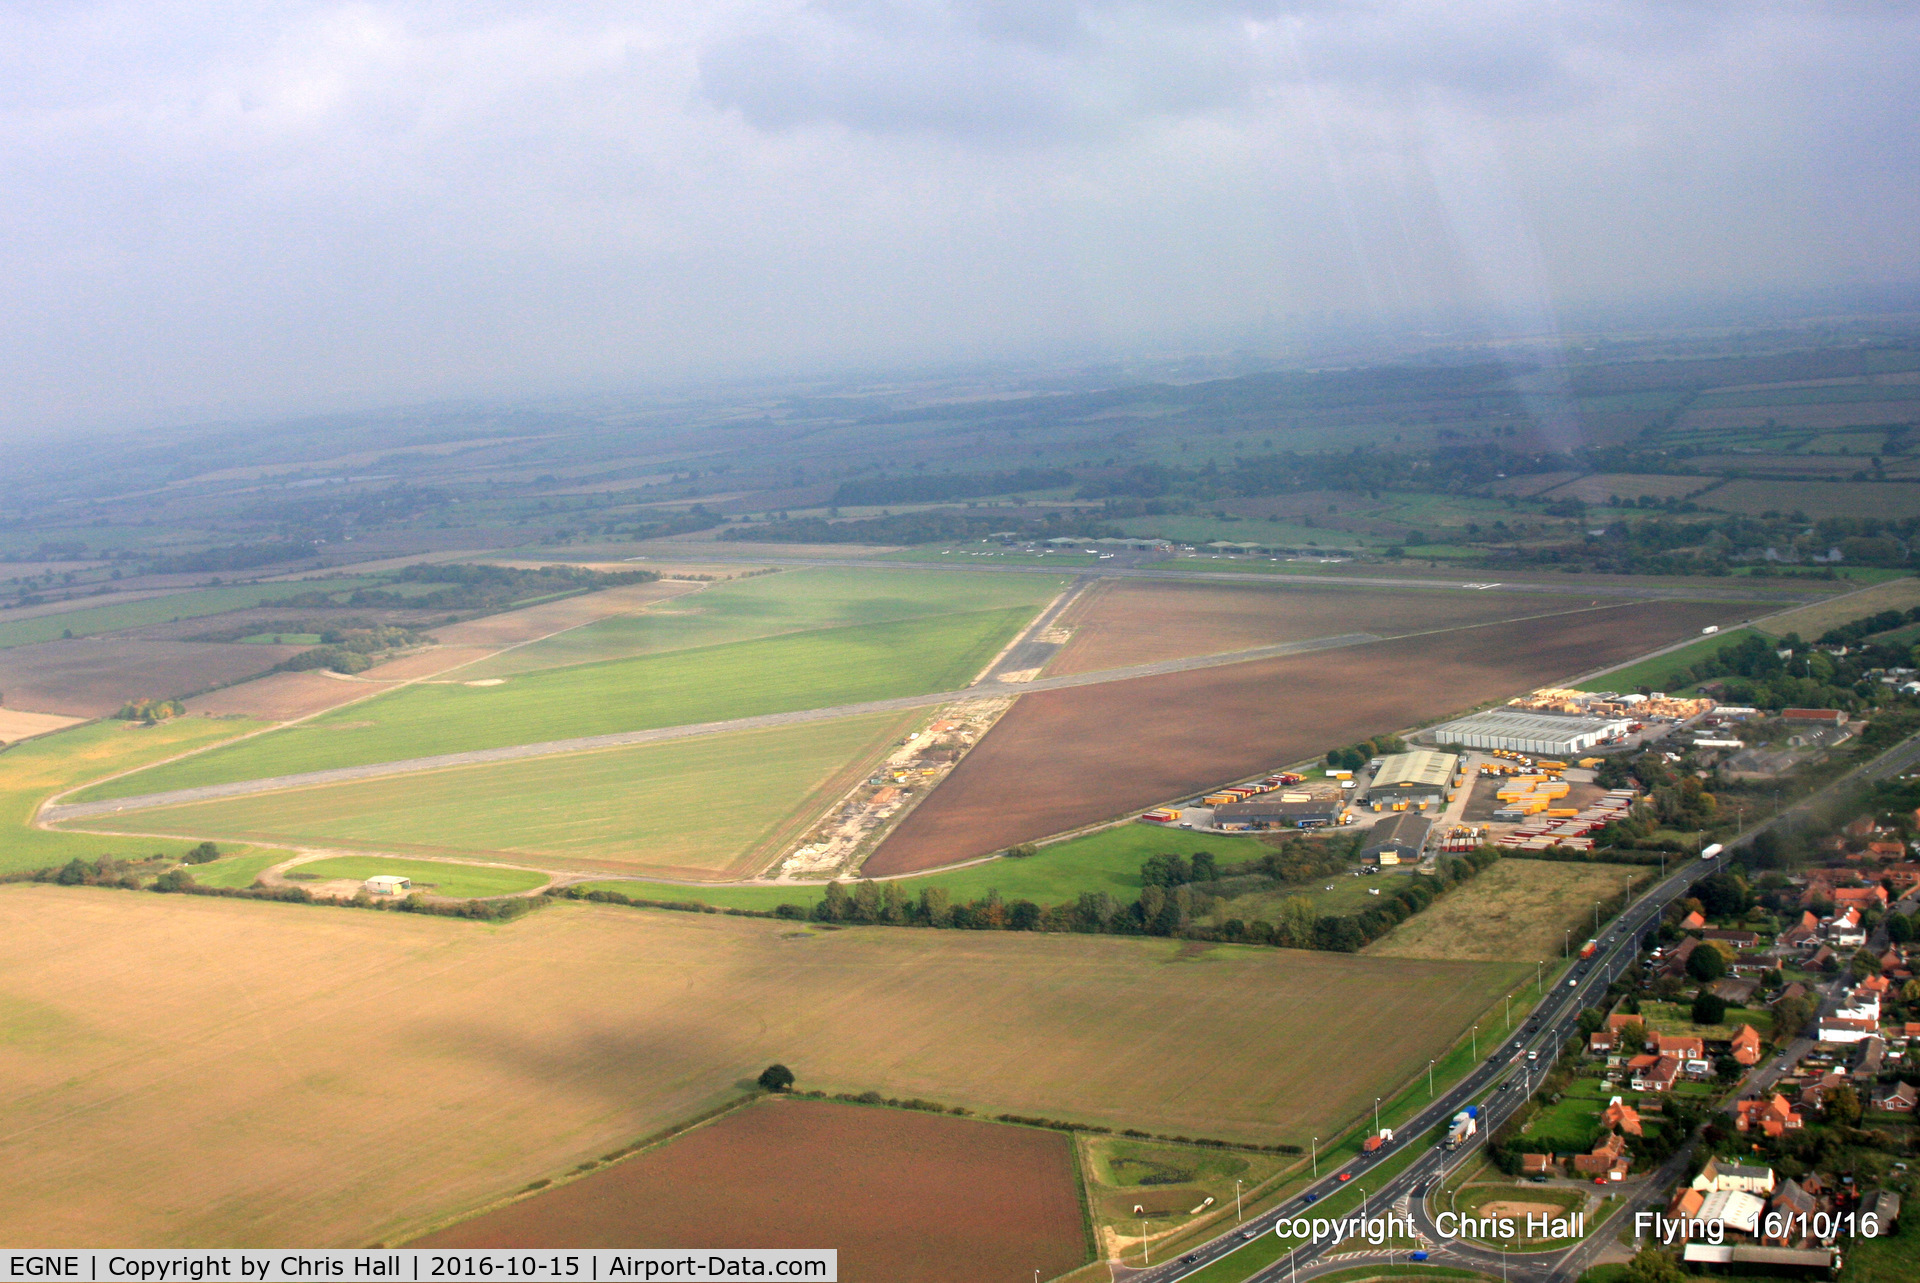 Gamston Airport, Retford, England United Kingdom (EGNE) - departing from Gamston